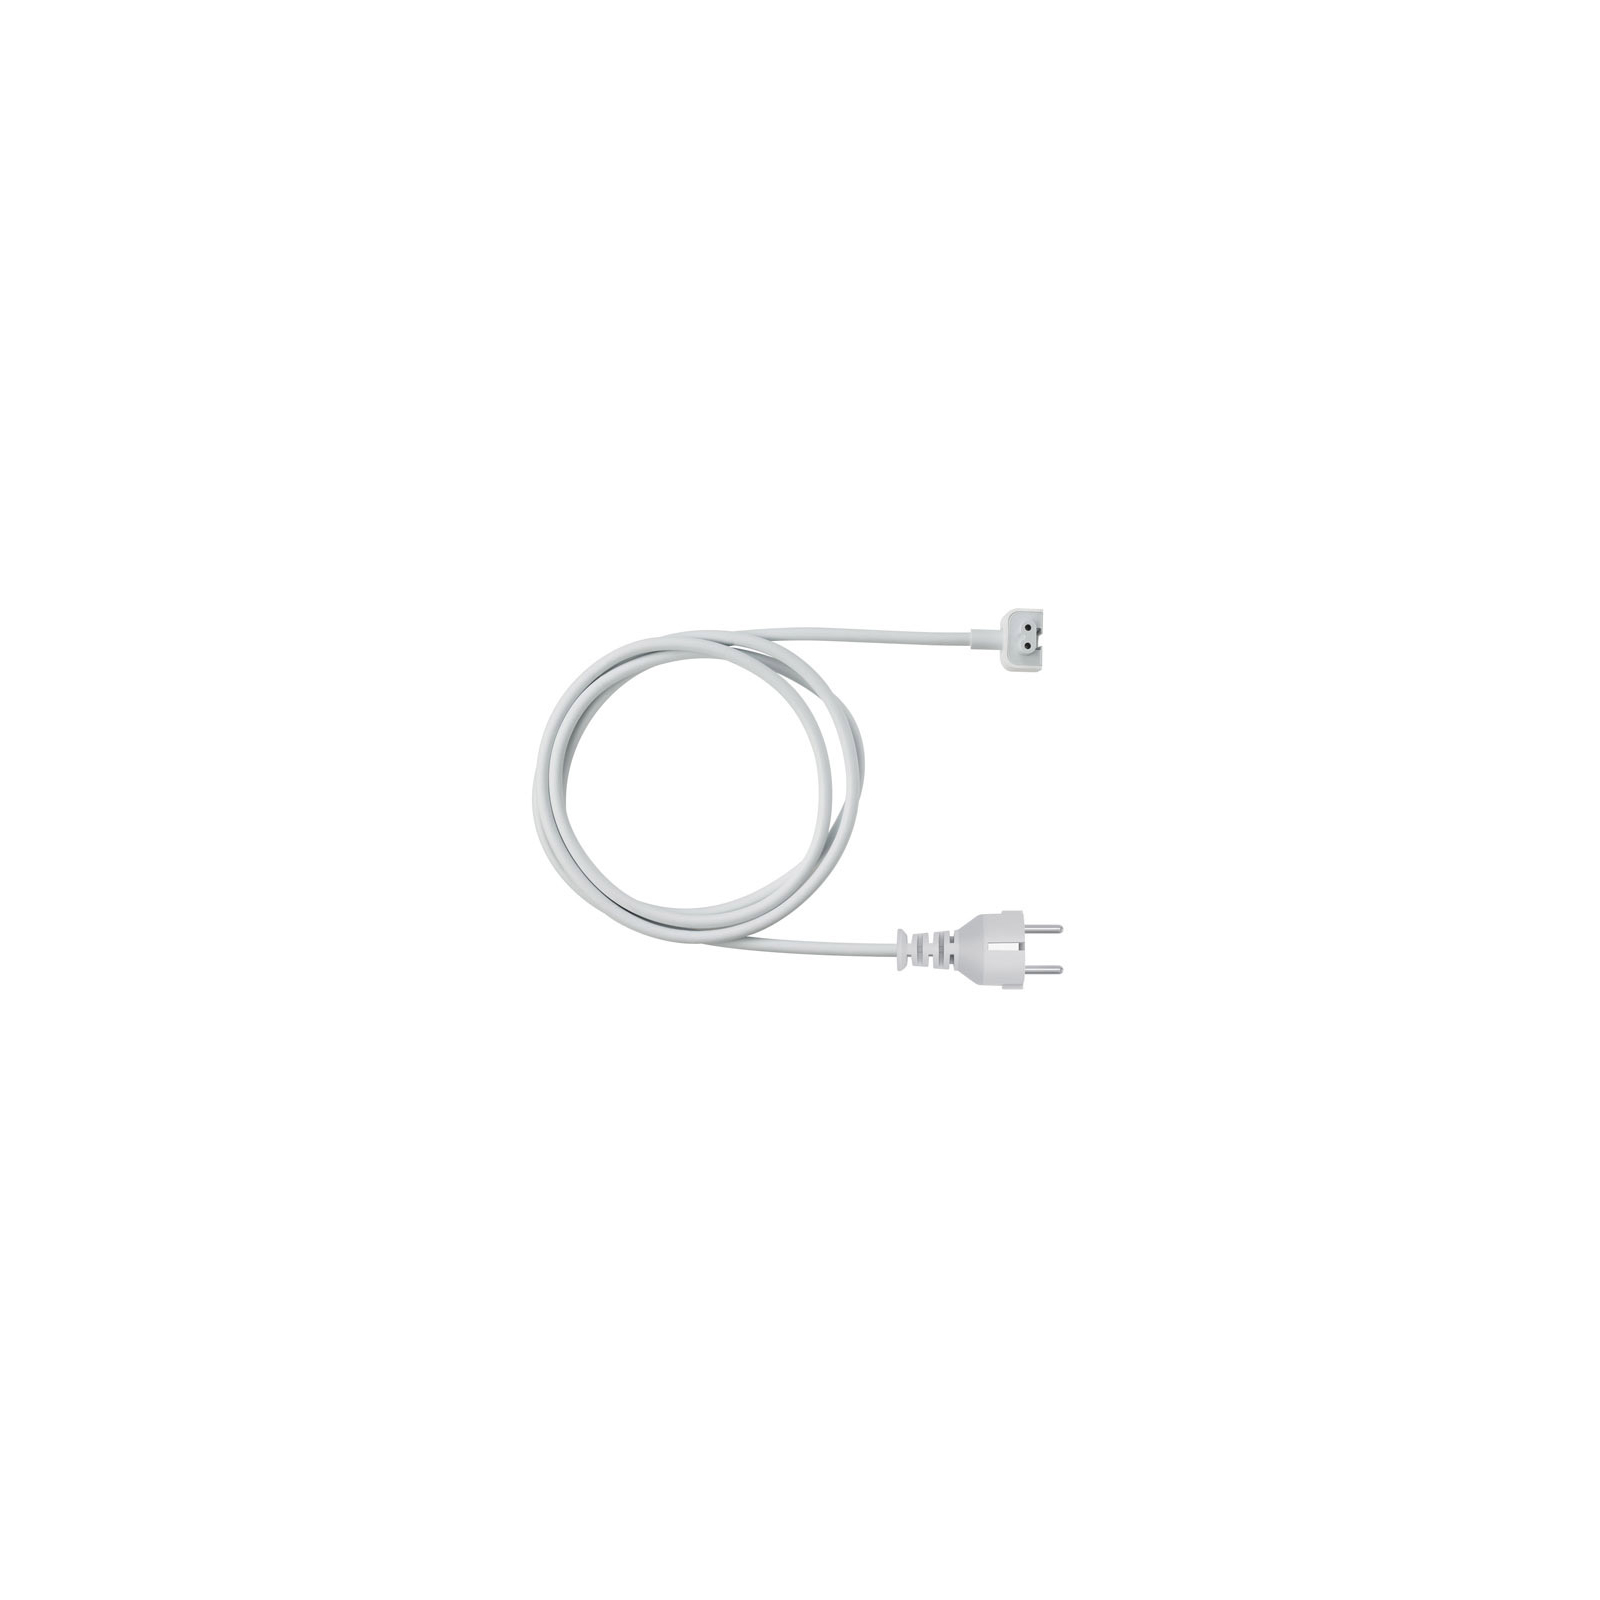 Кабель питания Apple Power Adapter Extension Cable (MK122Z/A)